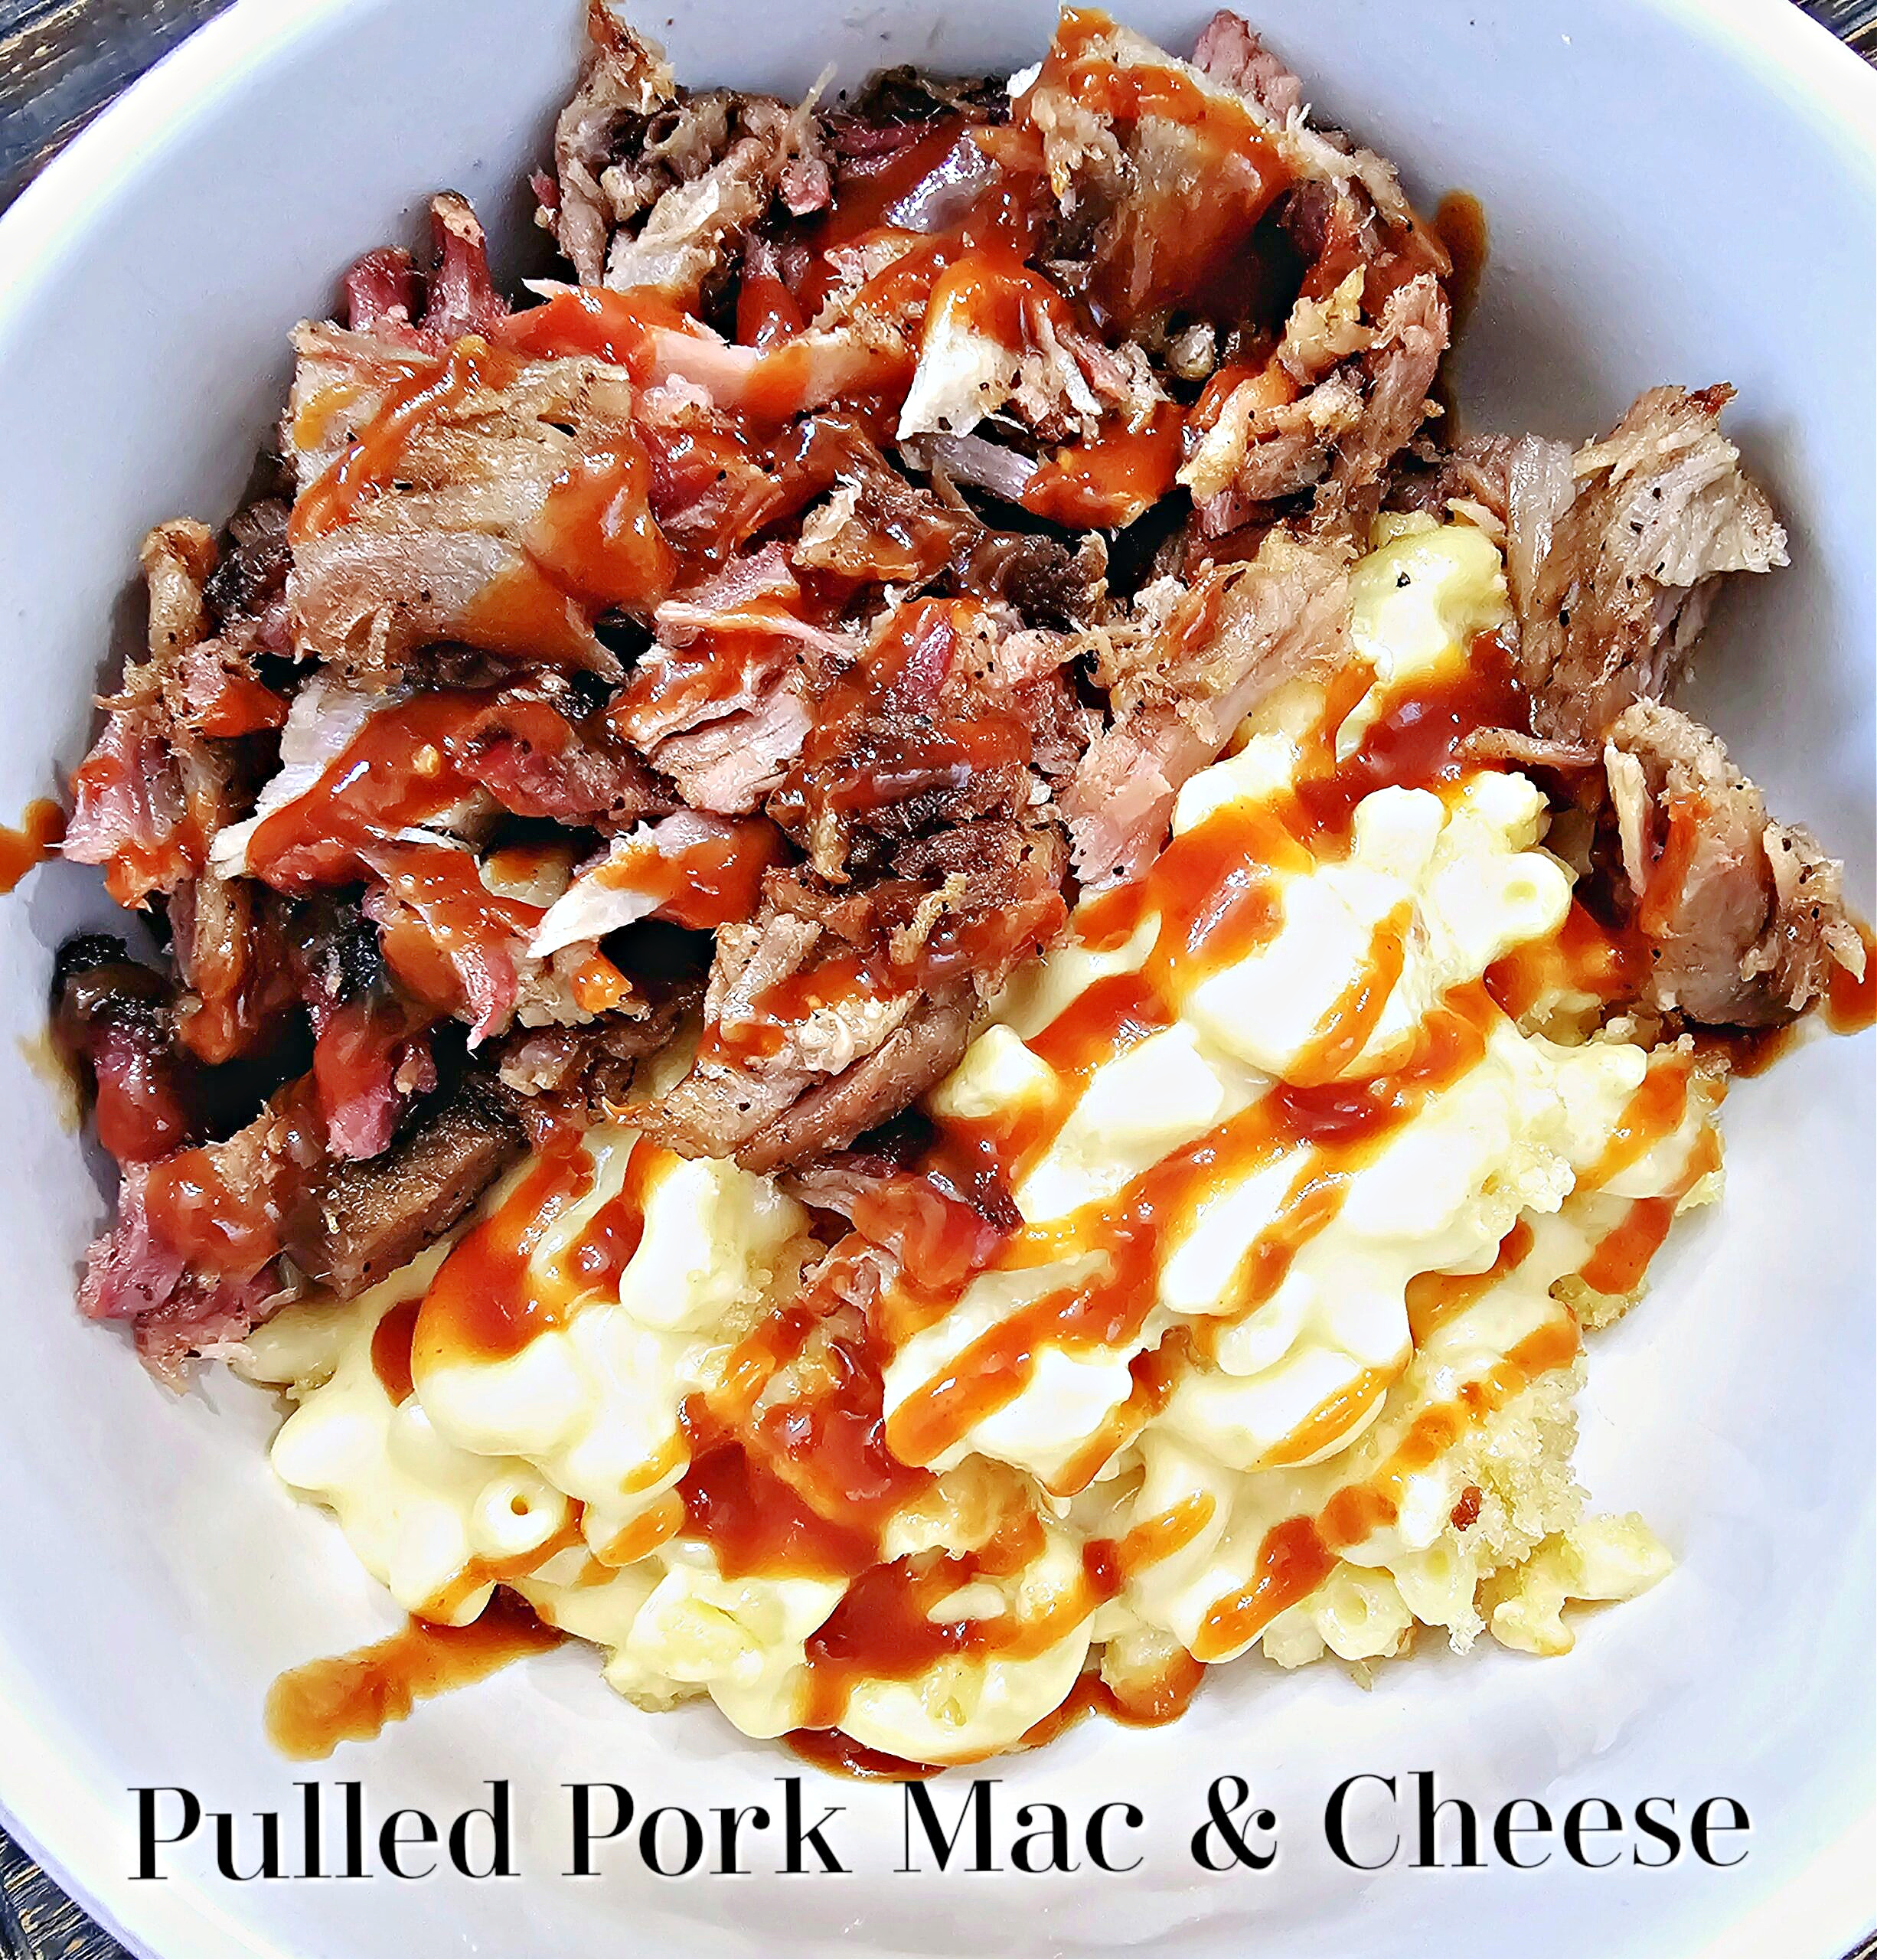 Pulled Pork Mac & Cheese #pulledpork #mac&cheese #pasta #pork